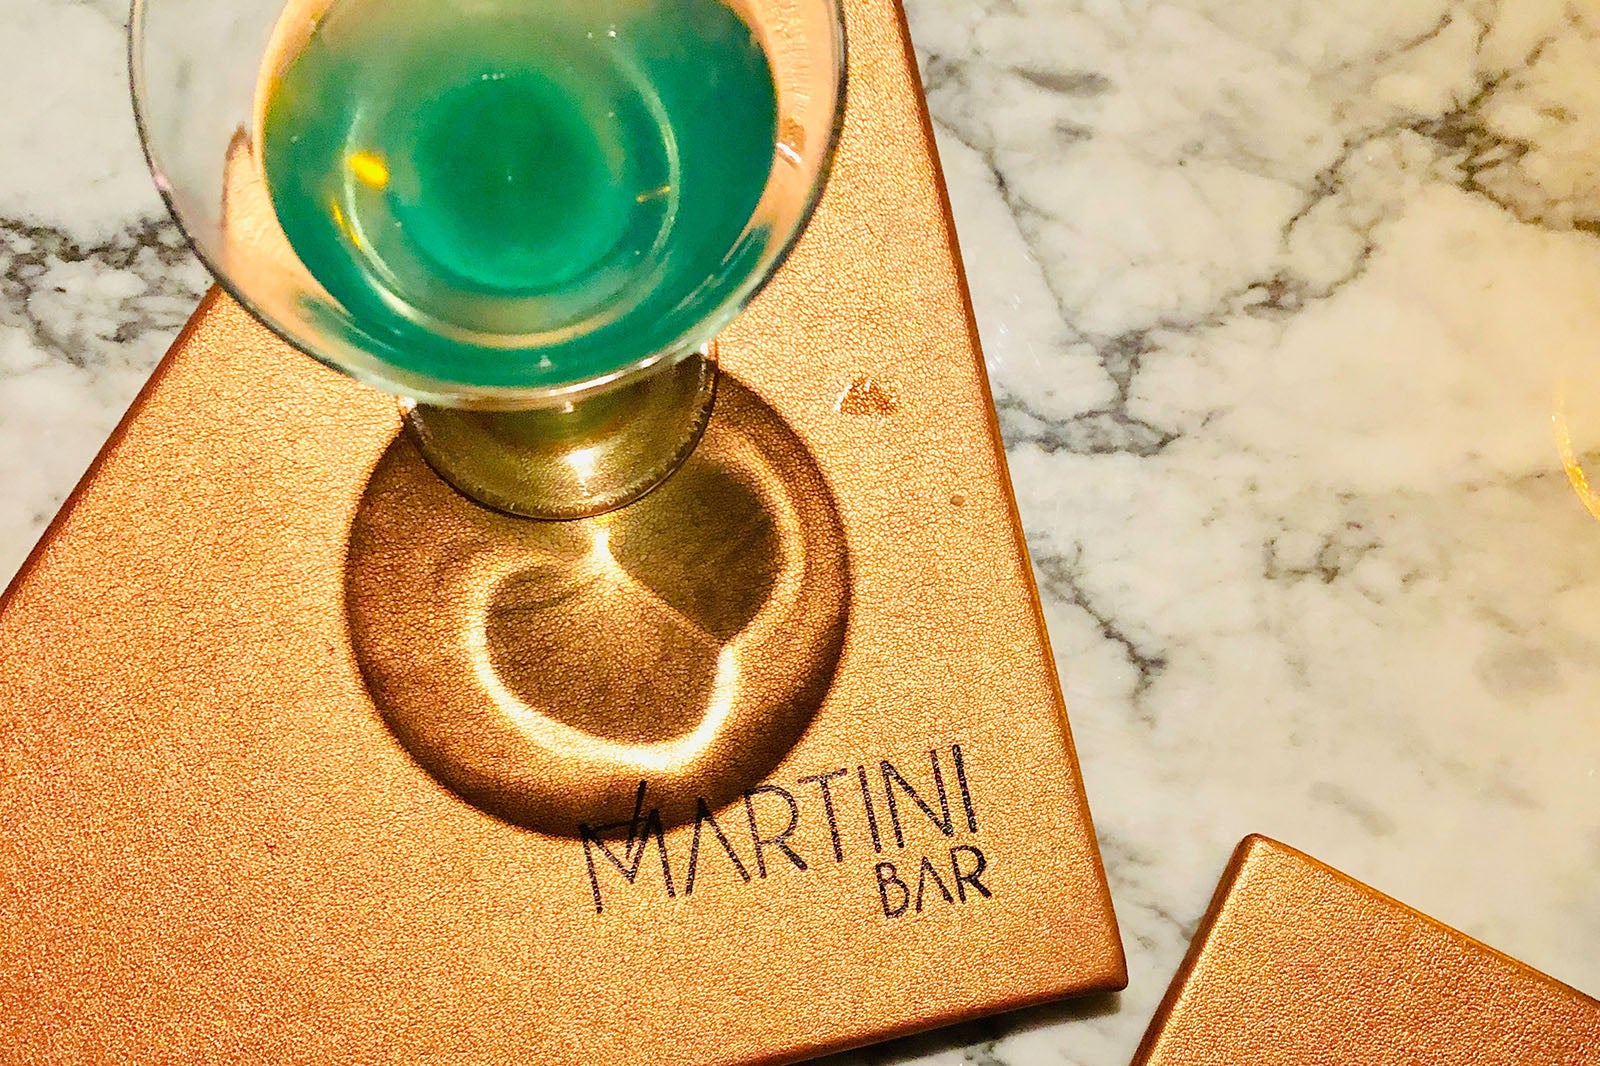 Martini drink at Martini Bar on Celebrity Cruises ship